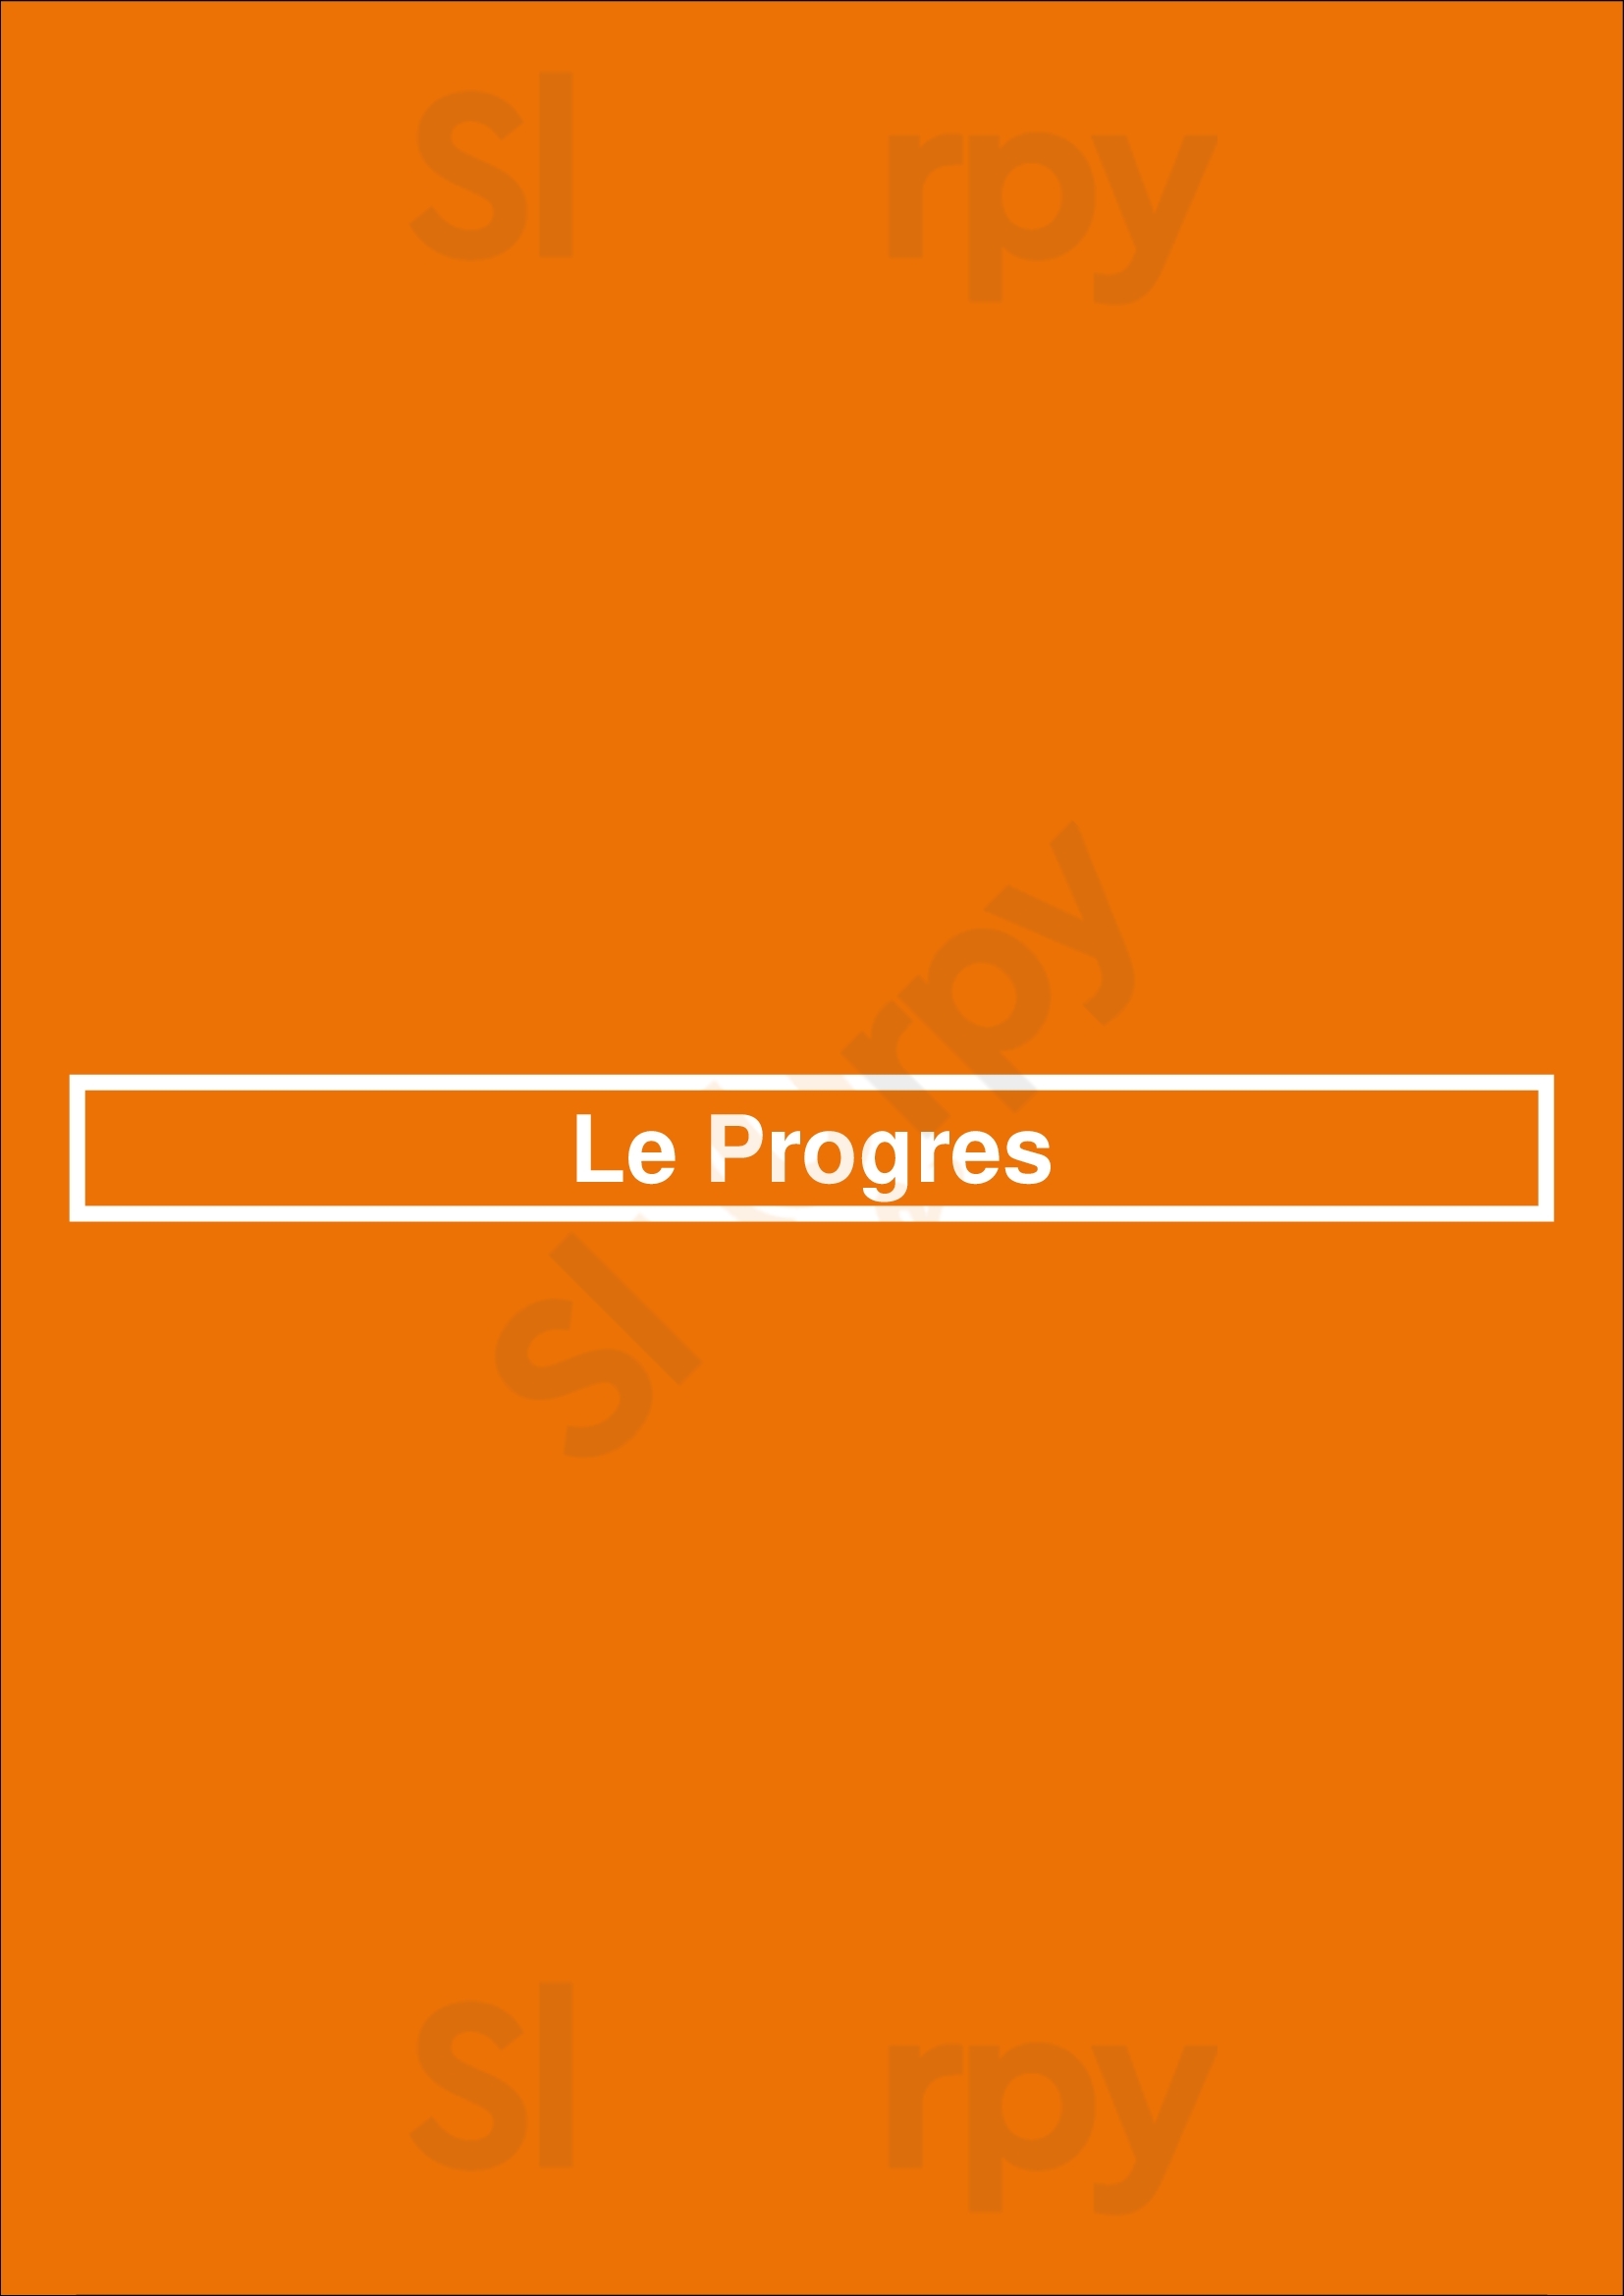 Le Progres Paris Menu - 1